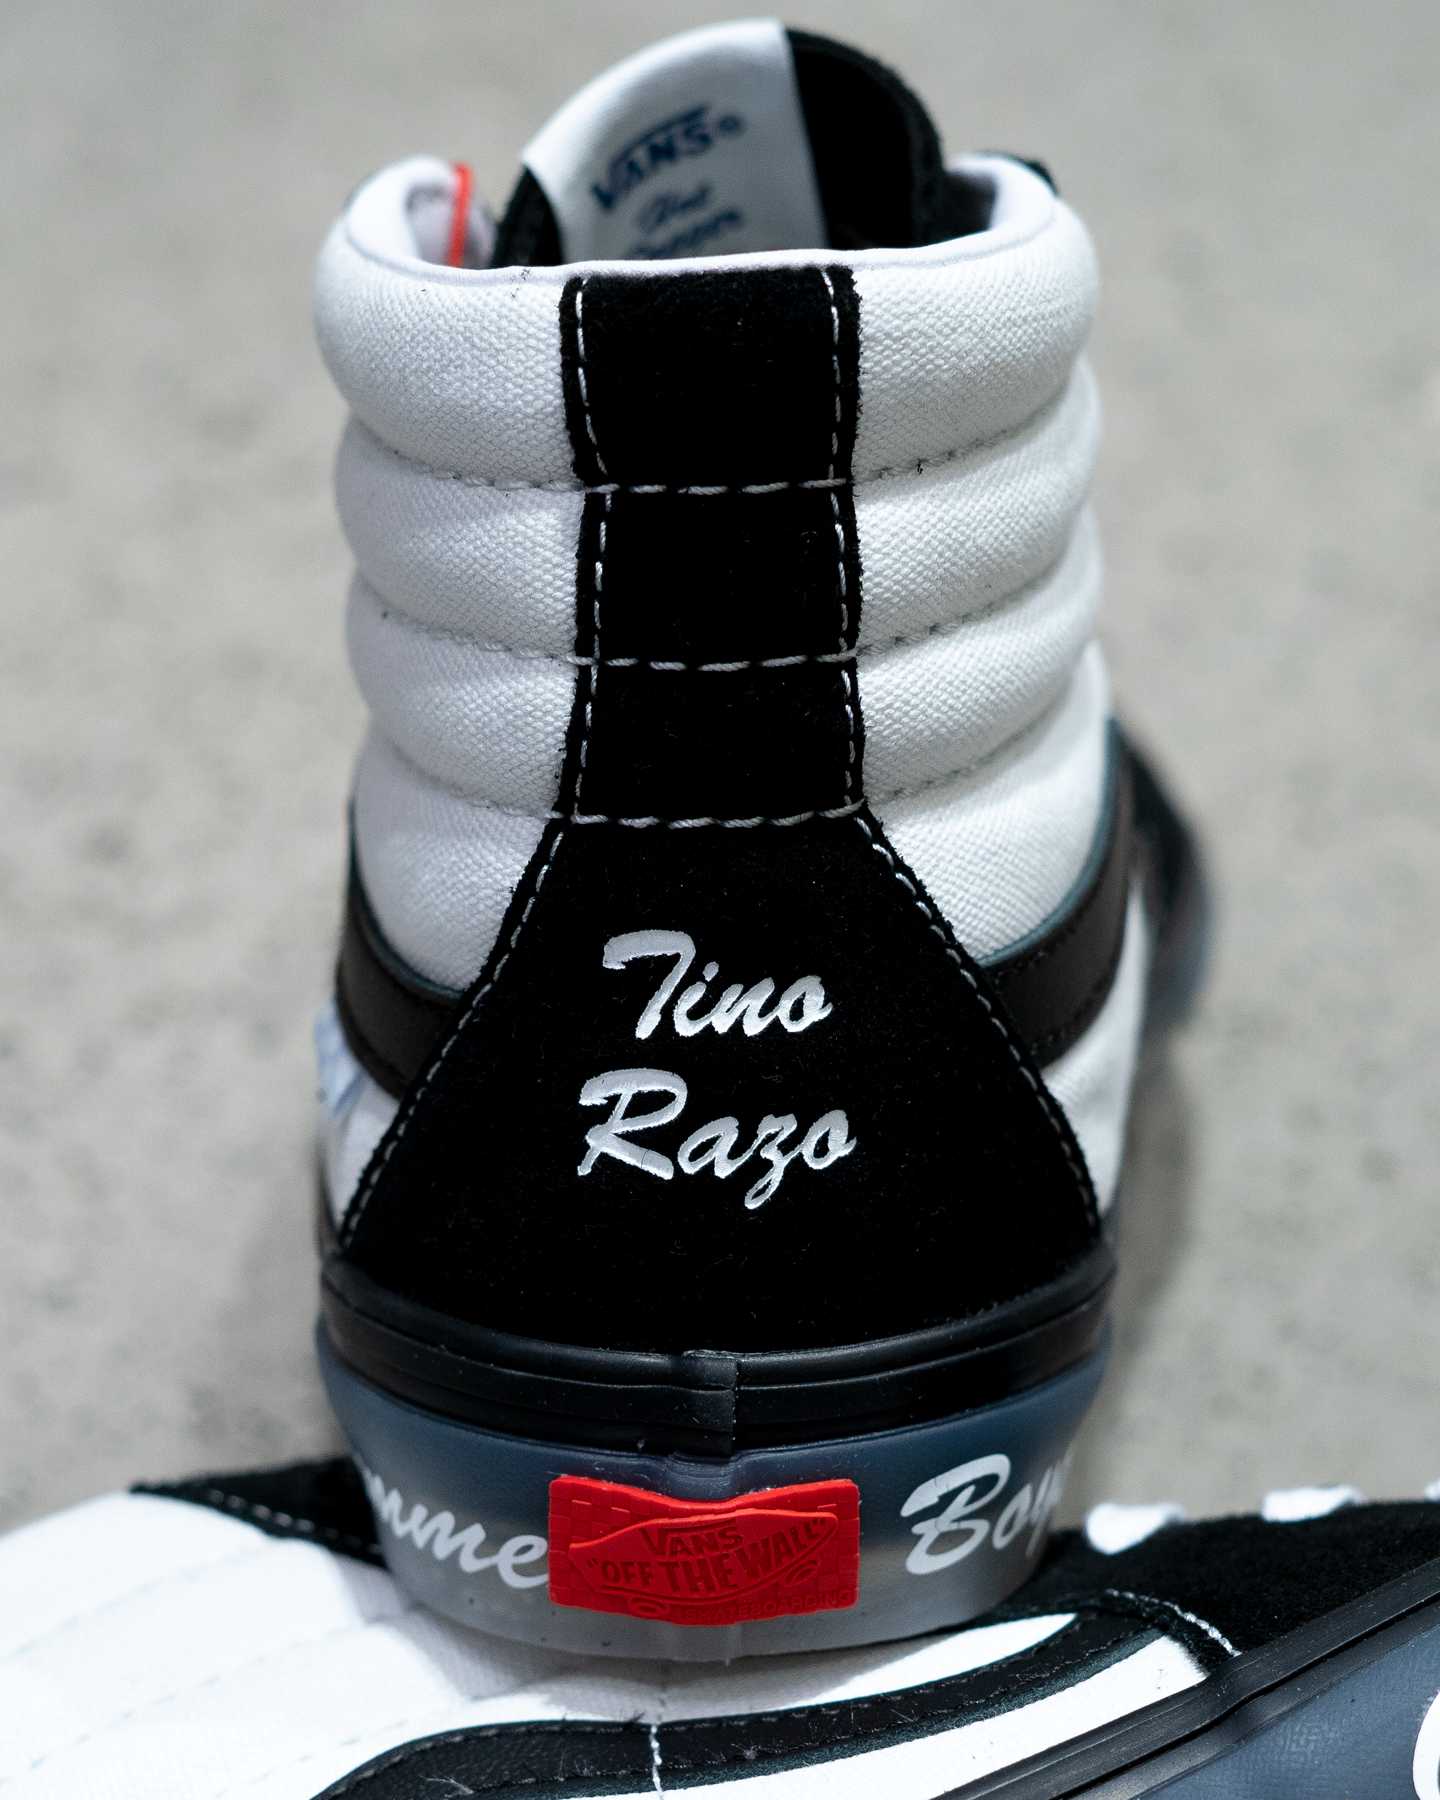 tino razo branding on heel of black and white vans sk8 hi